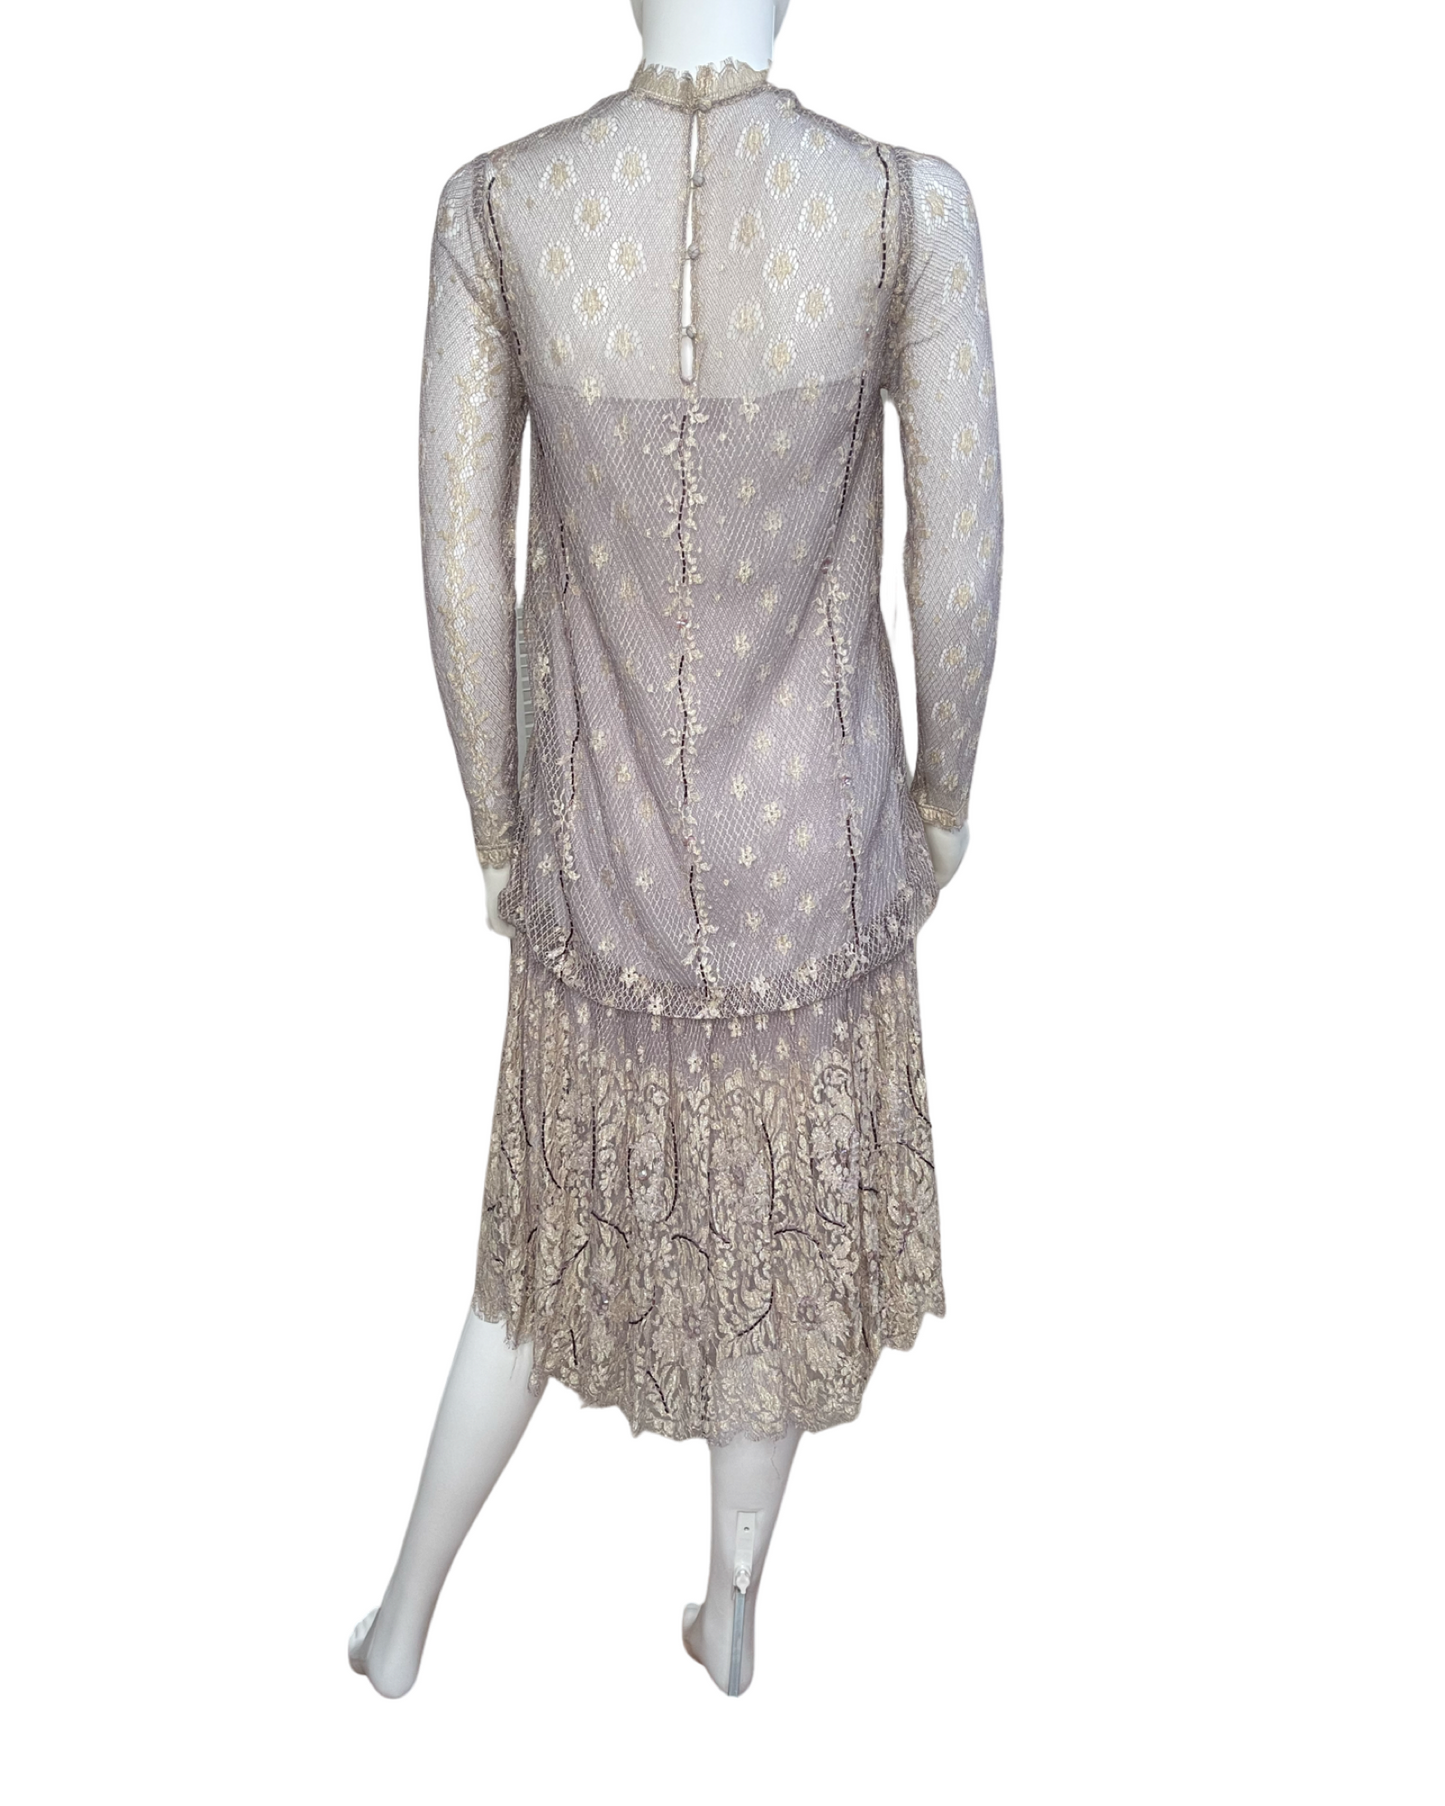 Vintage Neiman Marcus Dress